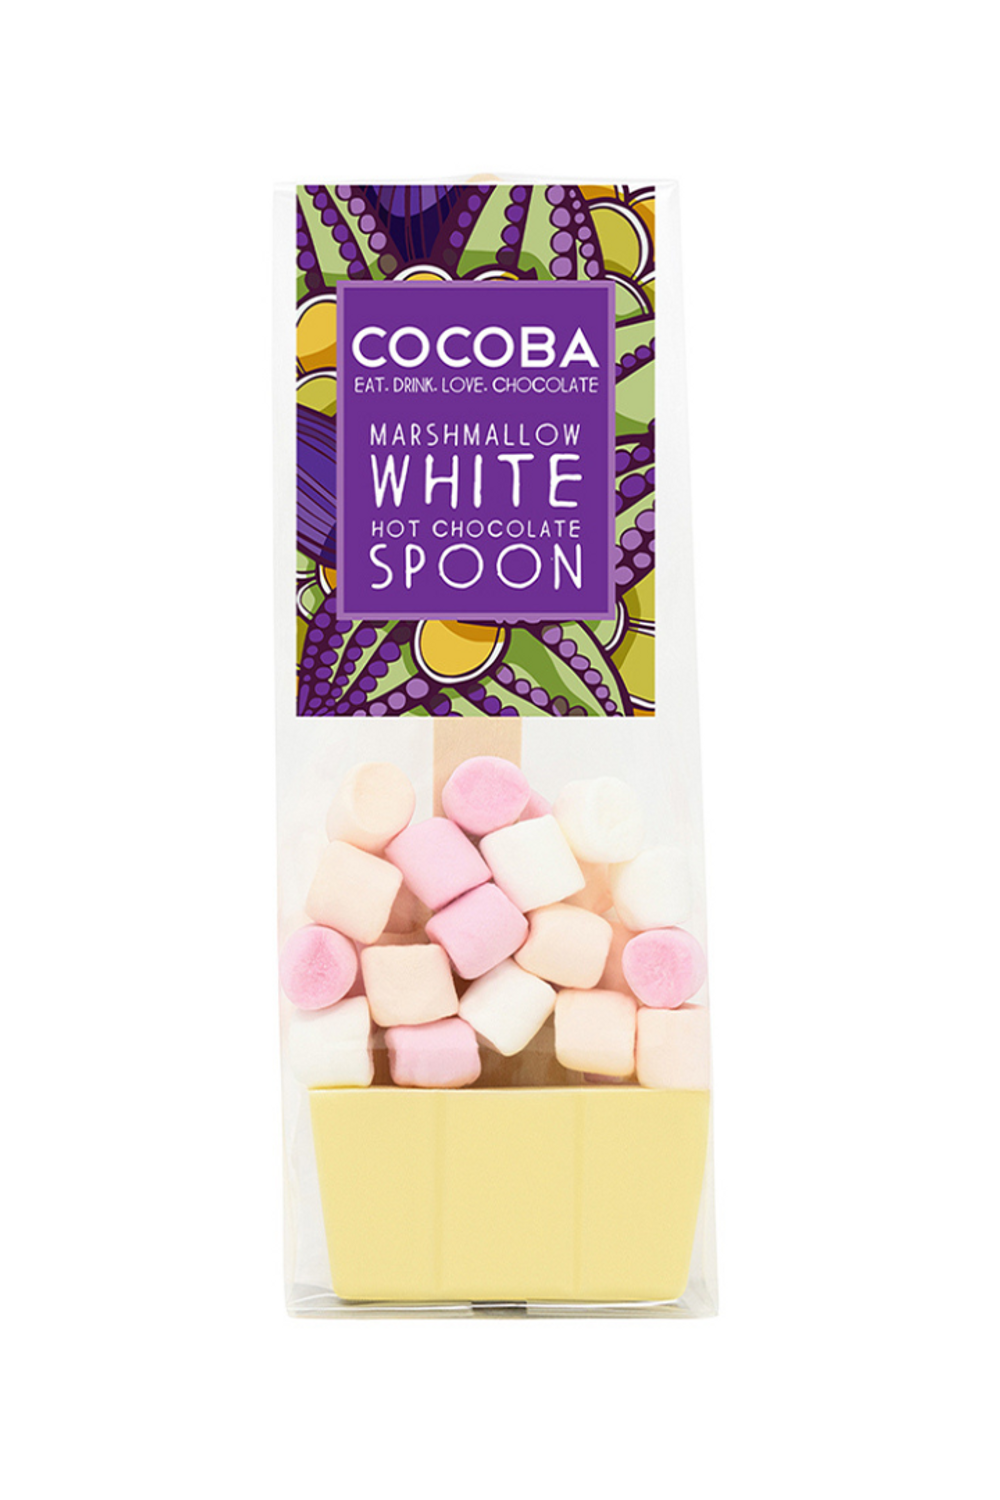 Marshmallow White Hot Chocolate Spoon